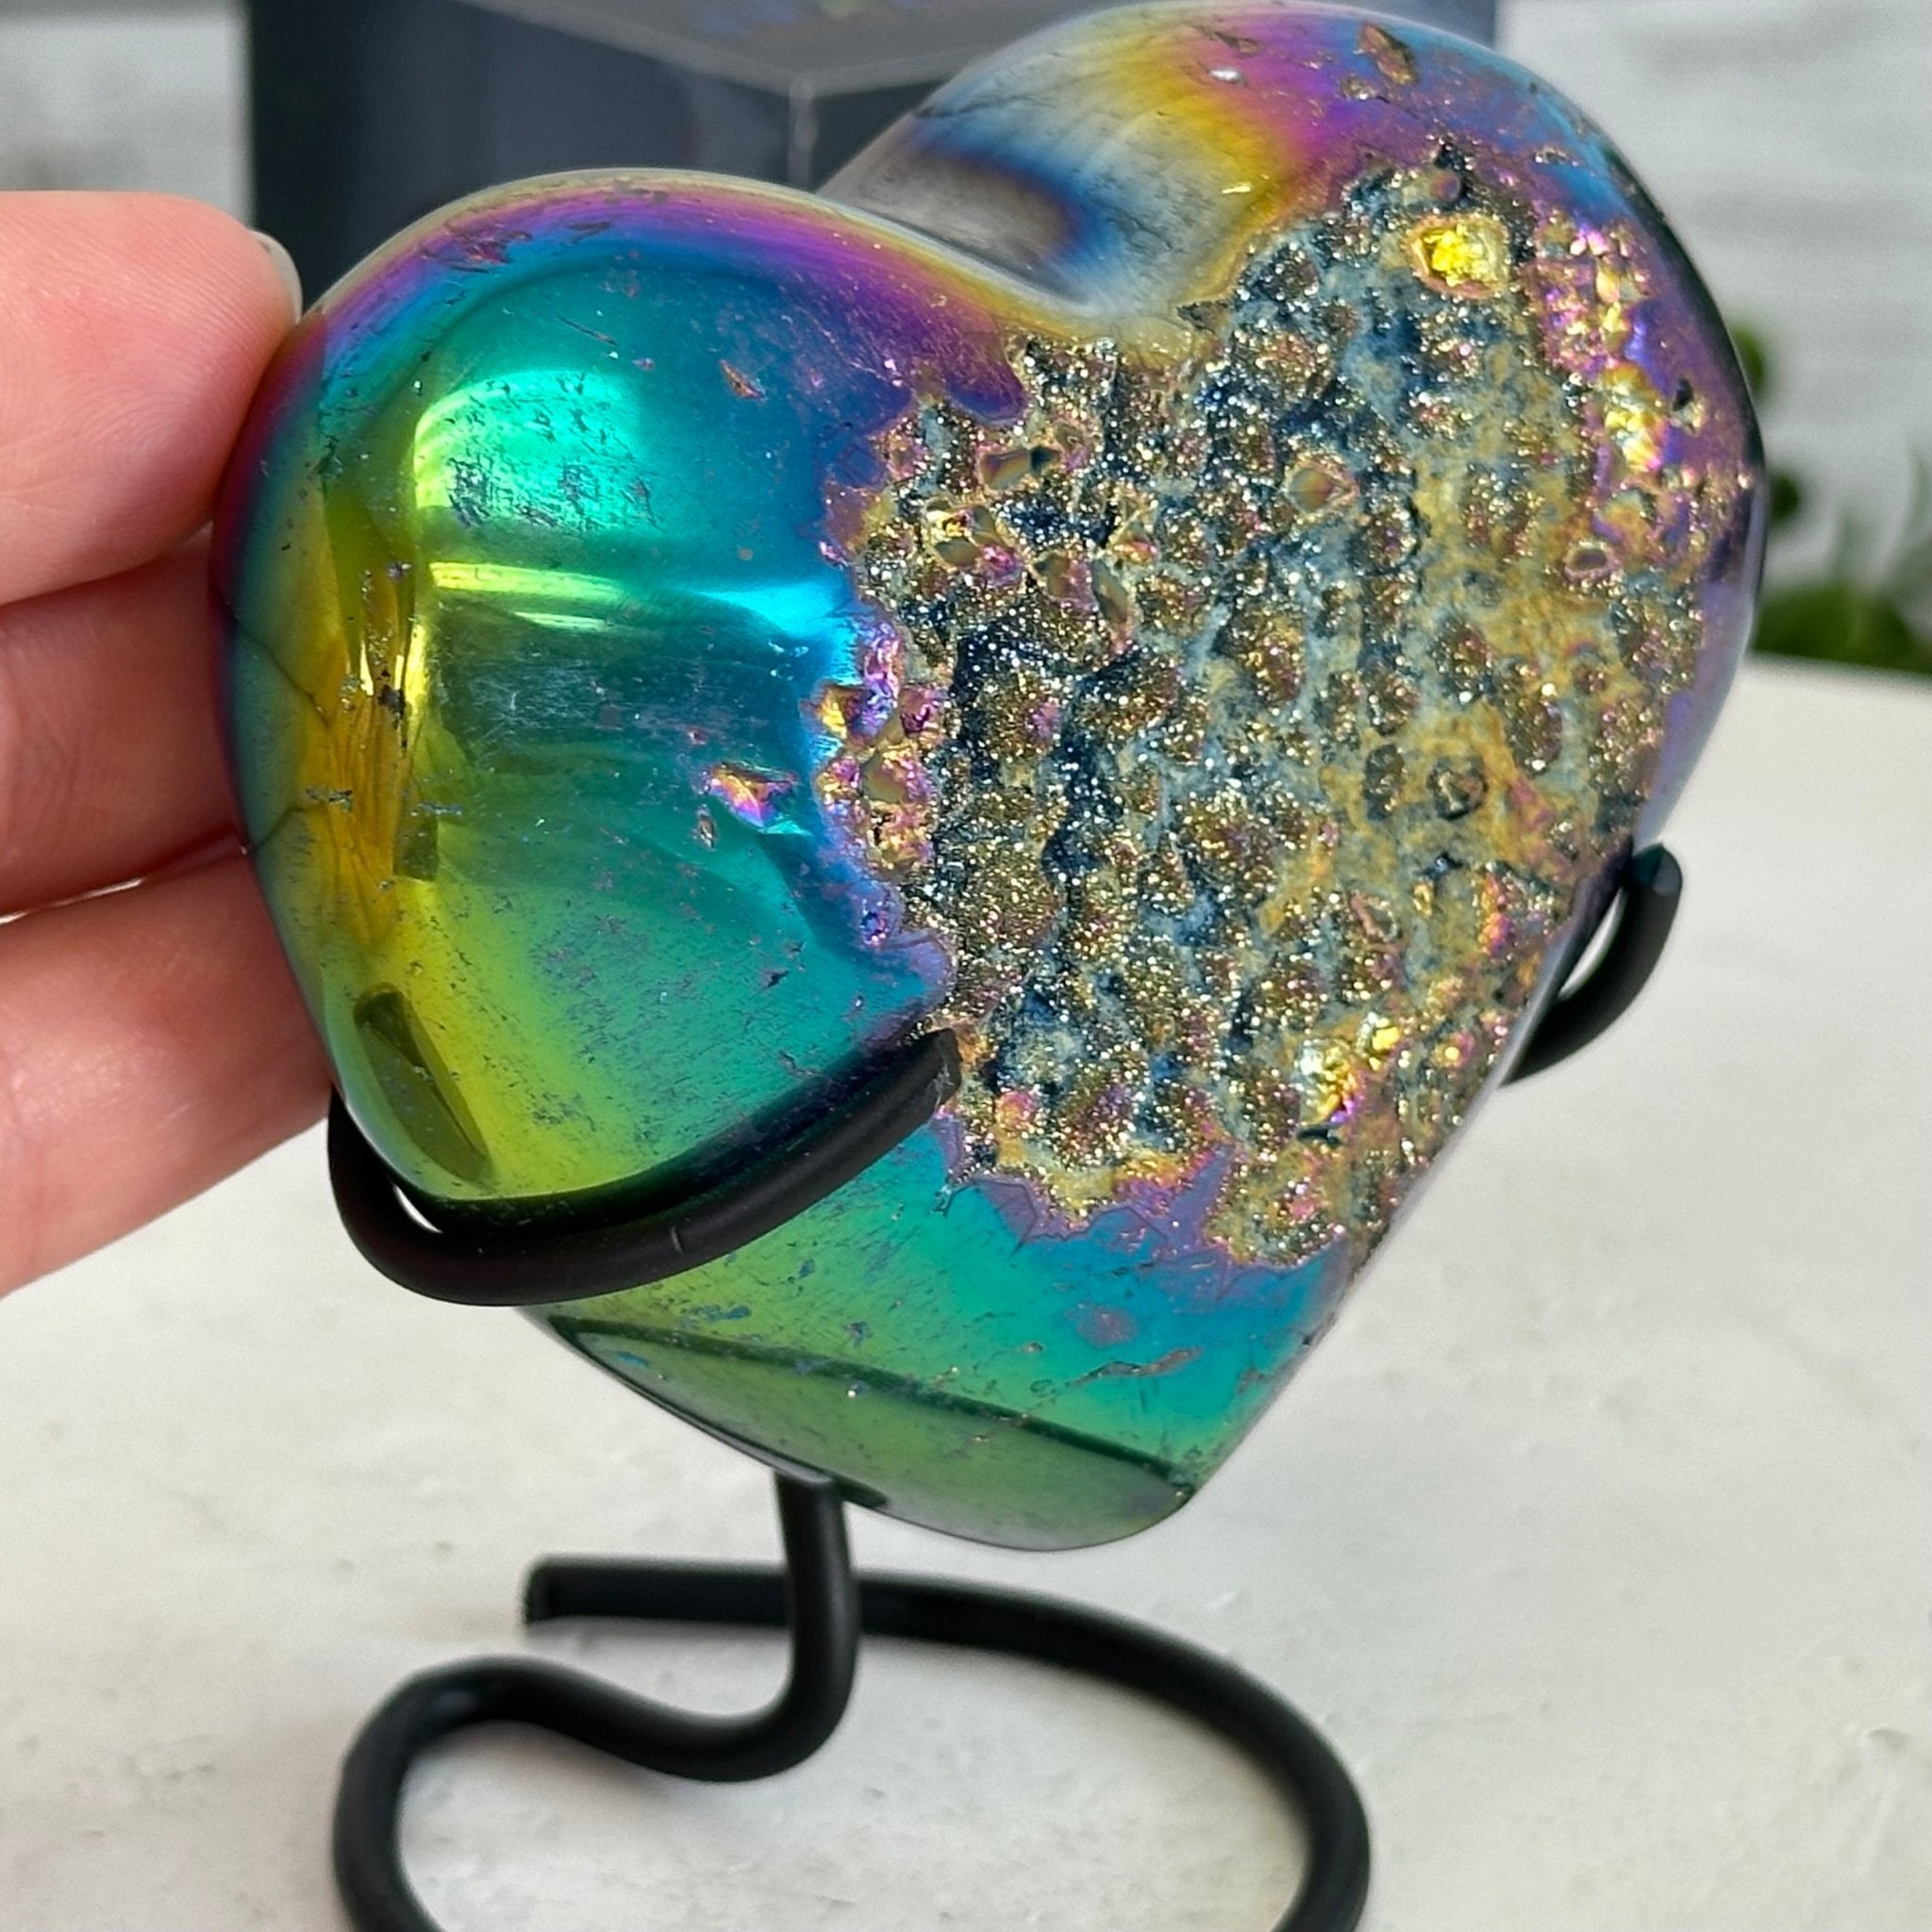 Rainbow Aura Amethyst Heart on a Metal Stand, 0.8 lbs & 3.8" Tall #5463RA-020 - Brazil GemsBrazil GemsRainbow Aura Amethyst Heart on a Metal Stand, 0.8 lbs & 3.8" Tall #5463RA-020Hearts5463RA-020